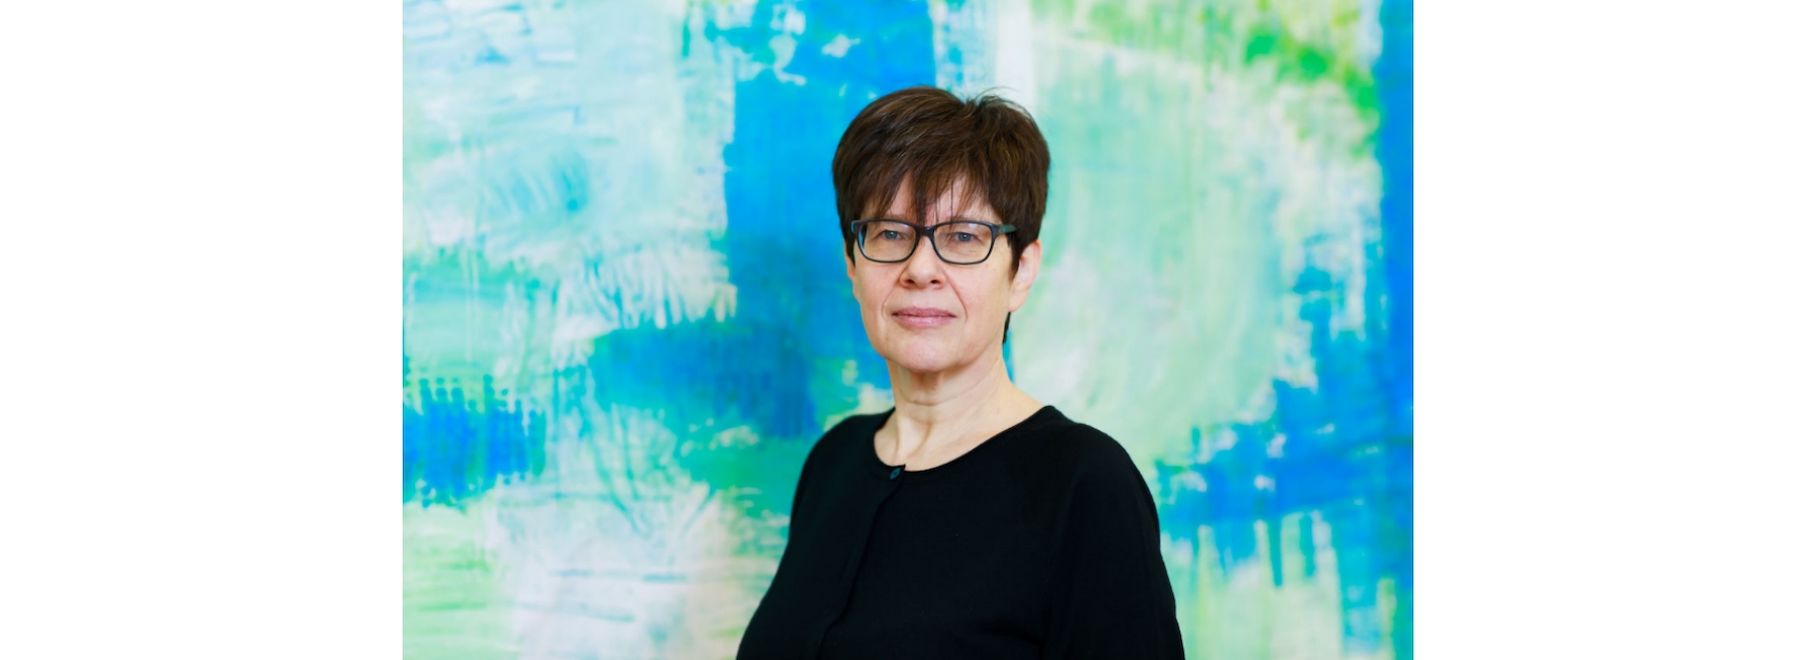 Mag.a Dr.in Andrea Seel wird neue Rektorin der KPH Graz